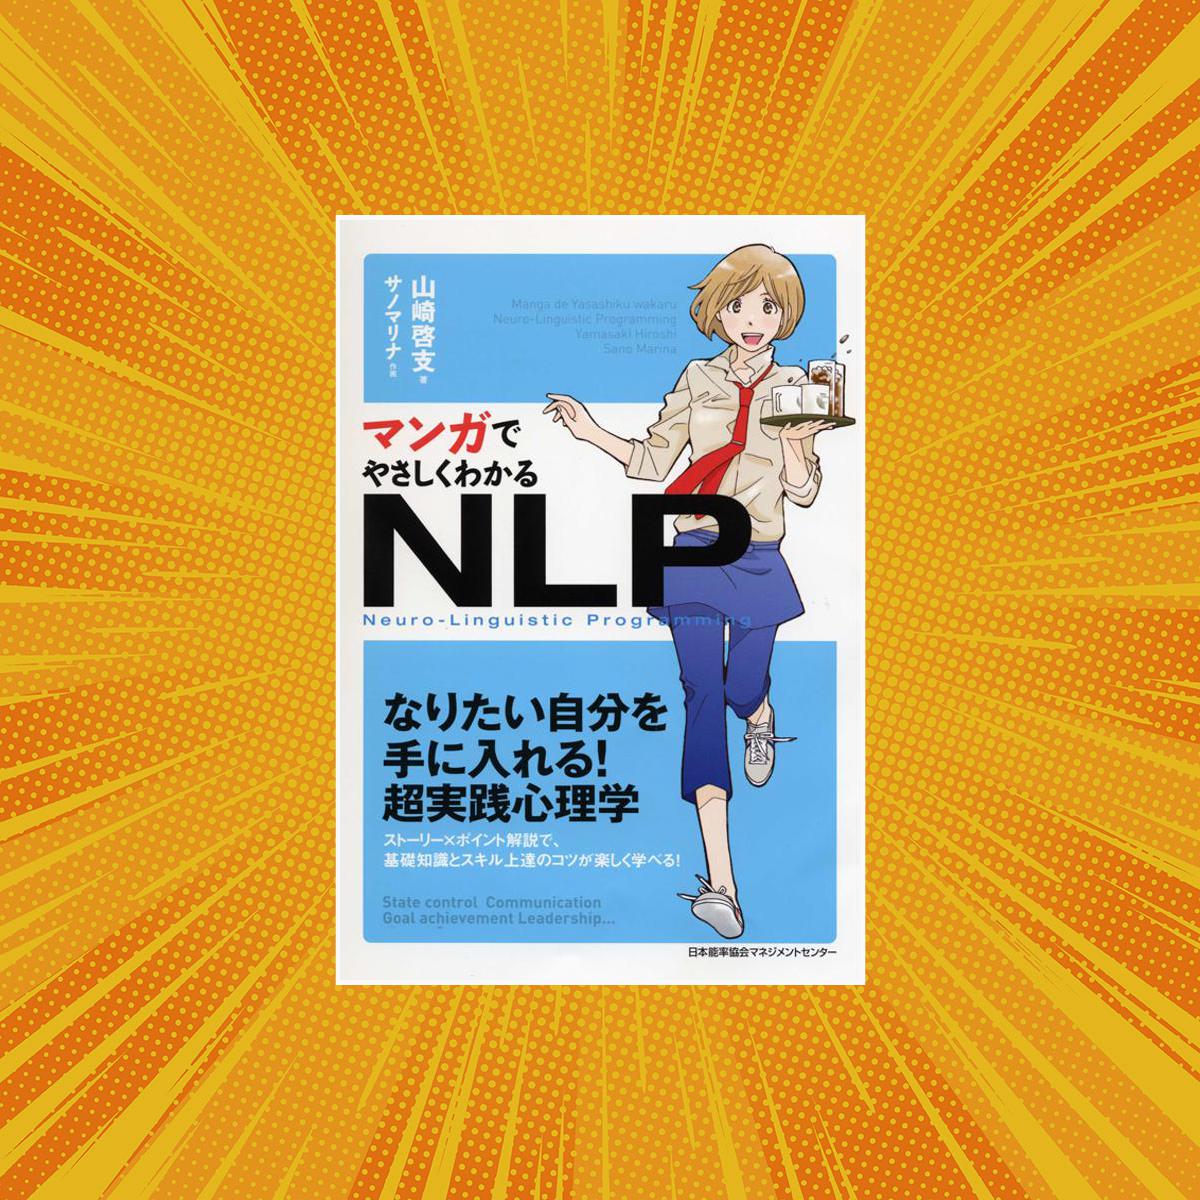 Easy reading through Manga | Neuro-Linguistic Programing (NLP)